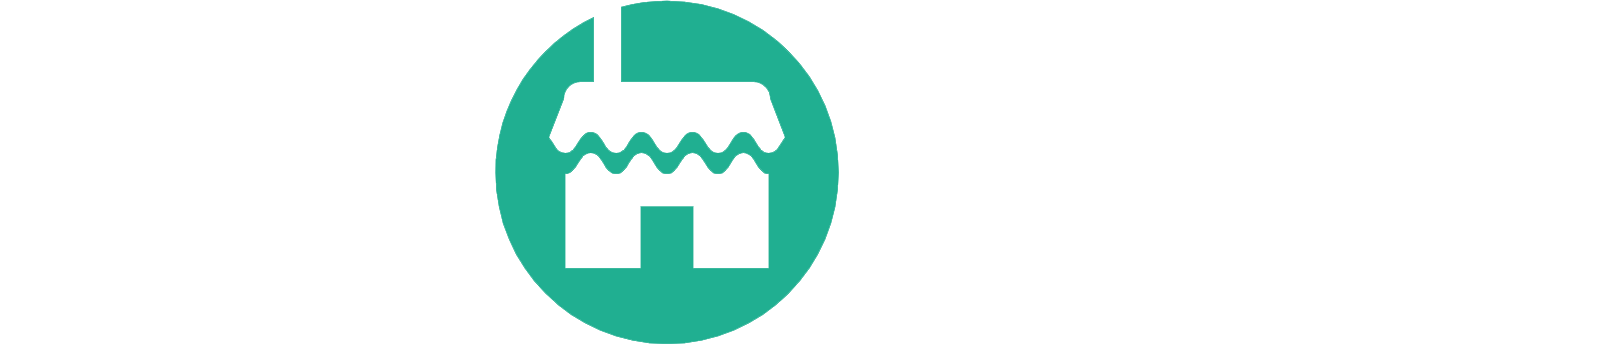 Web-Market Logo